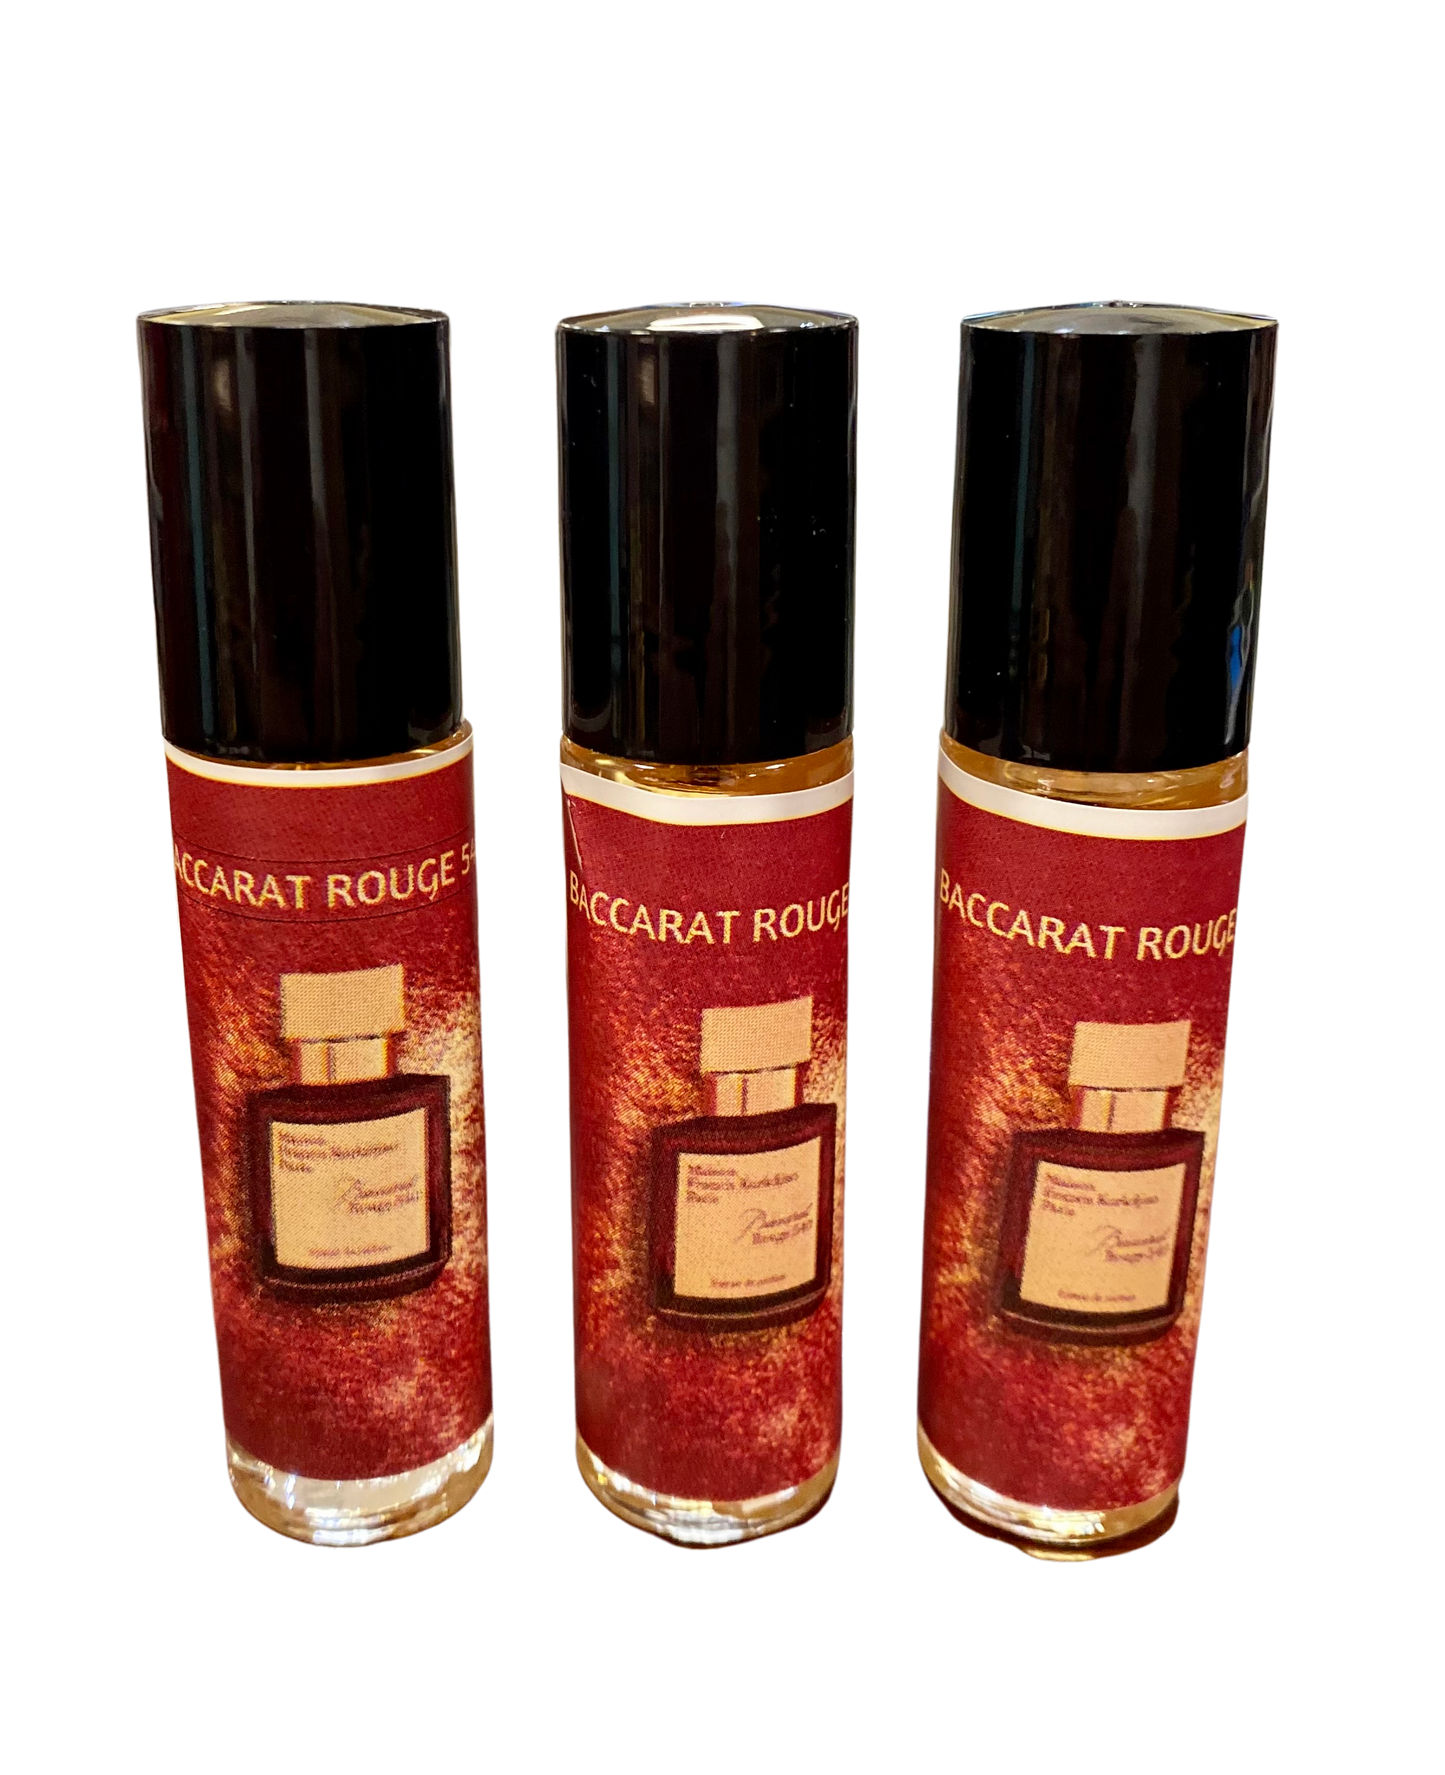 Baccarat Rouge Luxury Perfume Oil